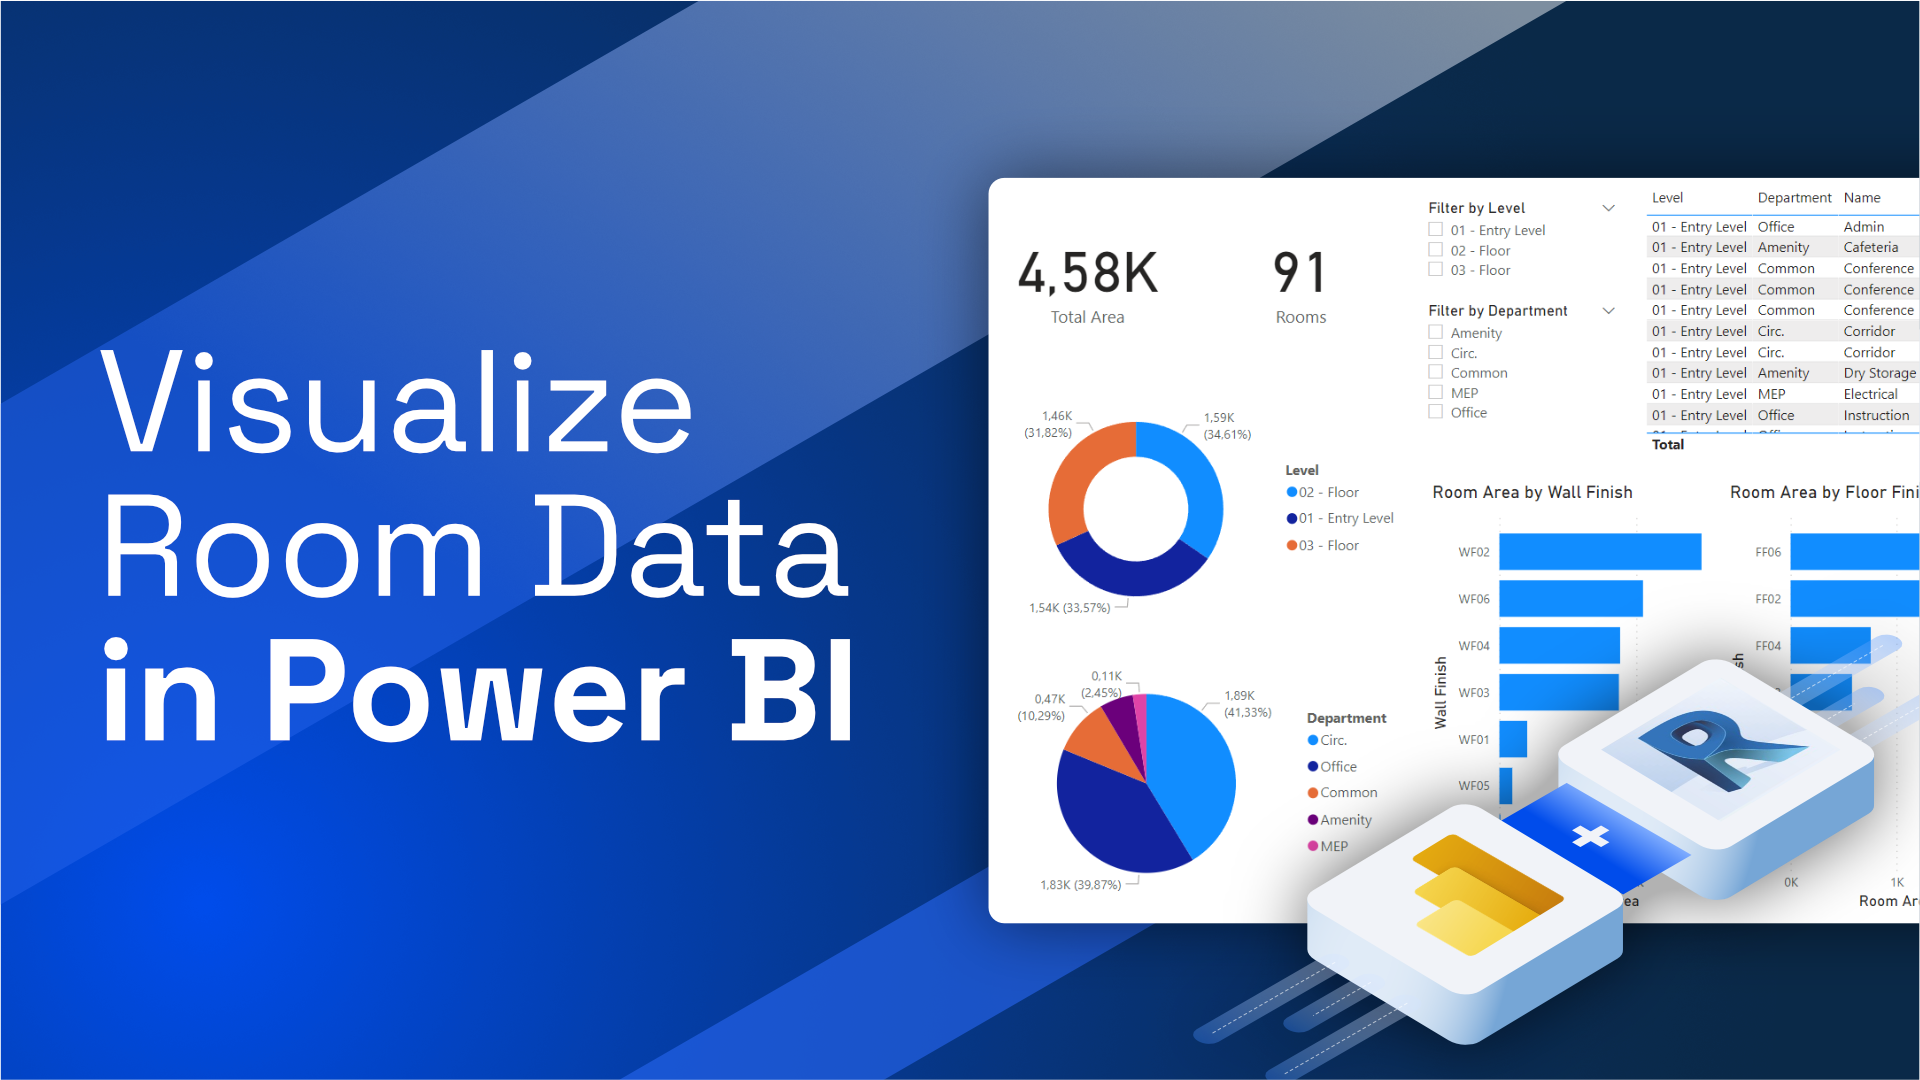 Visualizing Room Data in Power BI